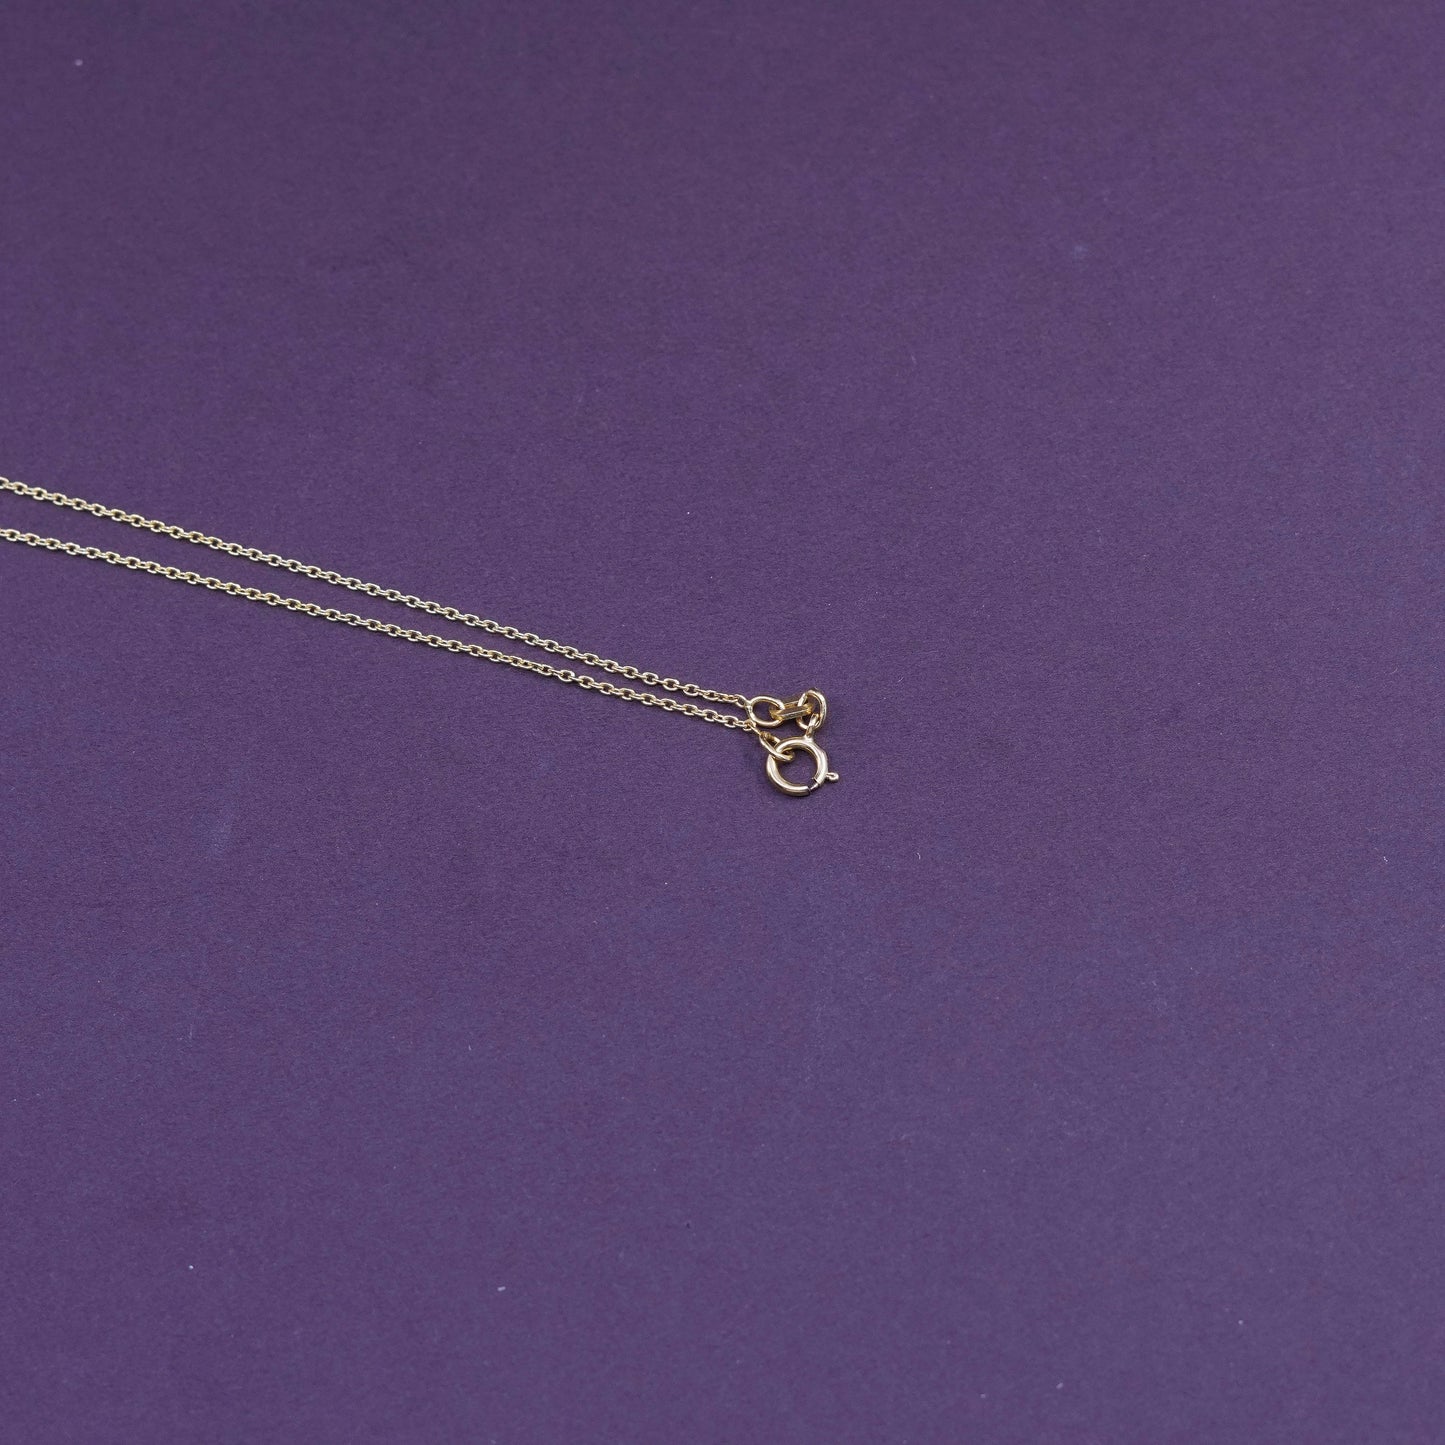 16”, vermeil gold Sterling silver necklace, 925 chain w/ diamond cross pendant